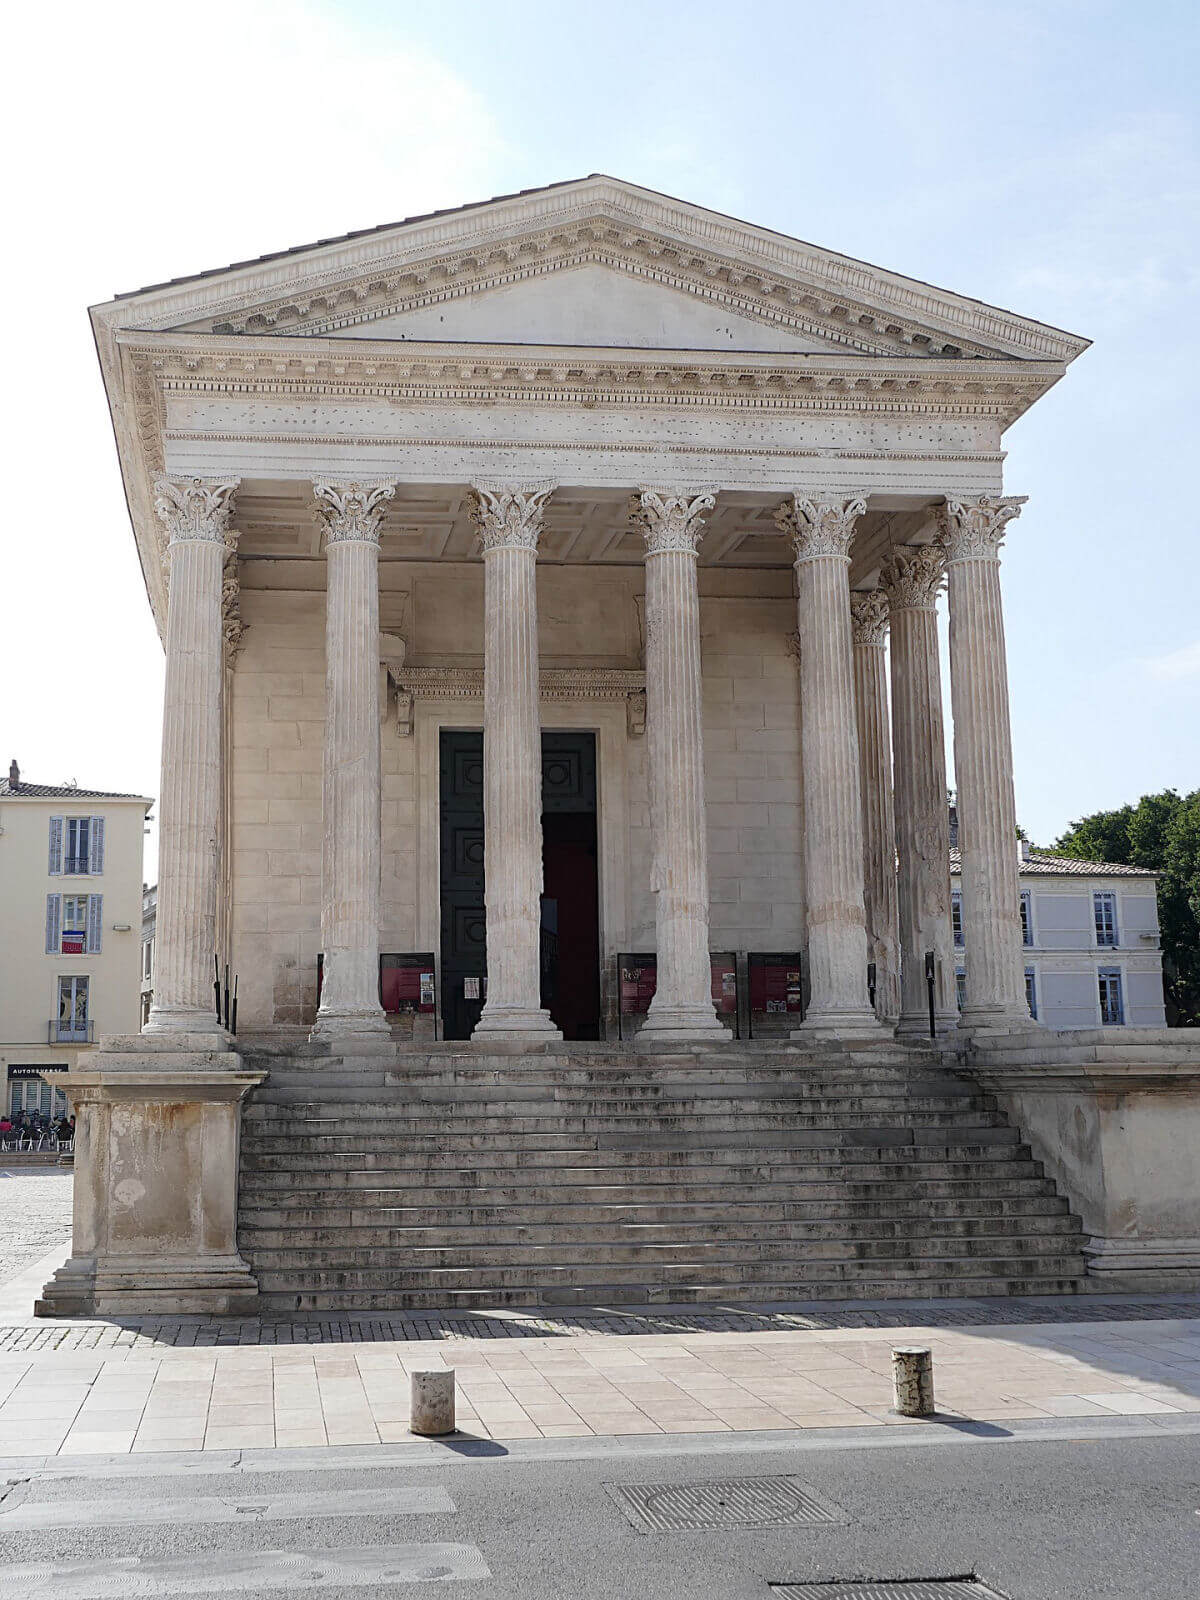 The Maison Carrée in Nîmes, France